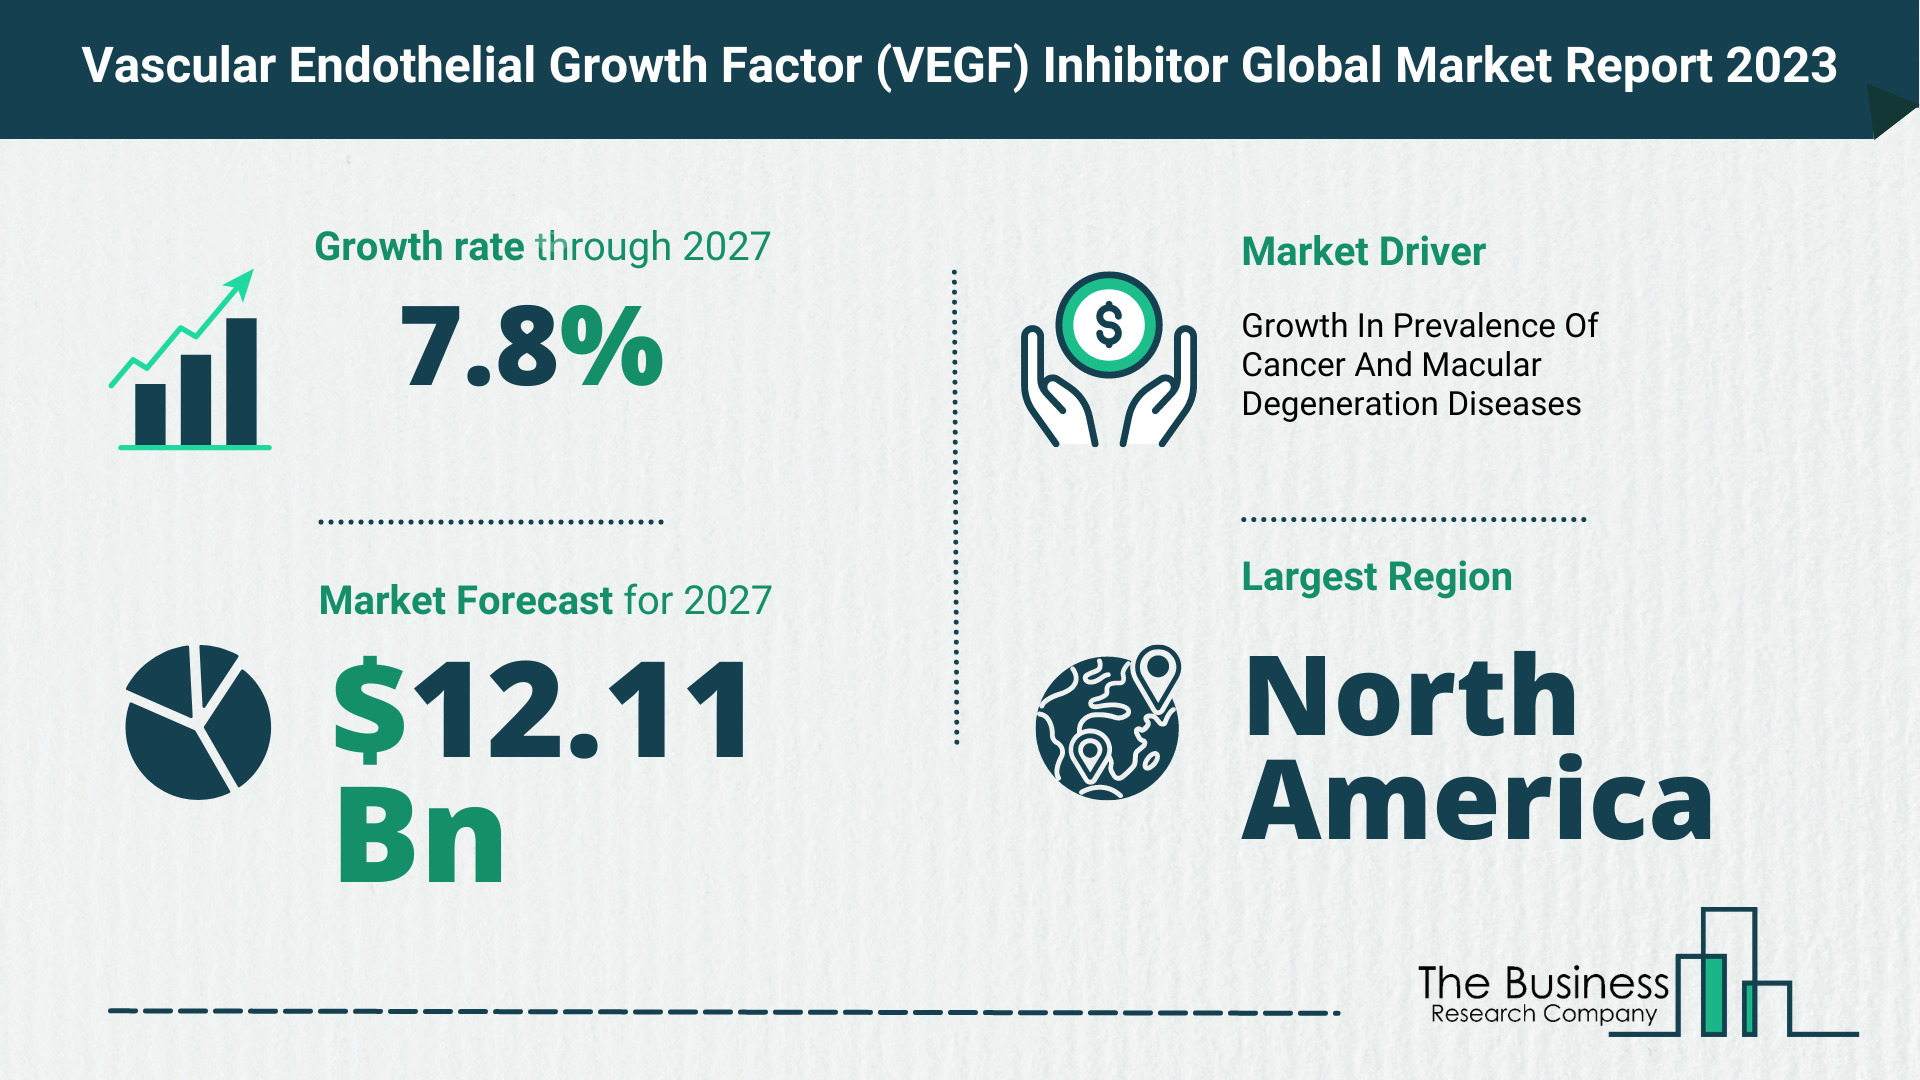 Global Vascular Endothelial Growth Factor (VEGF) Inhibitor Market Size